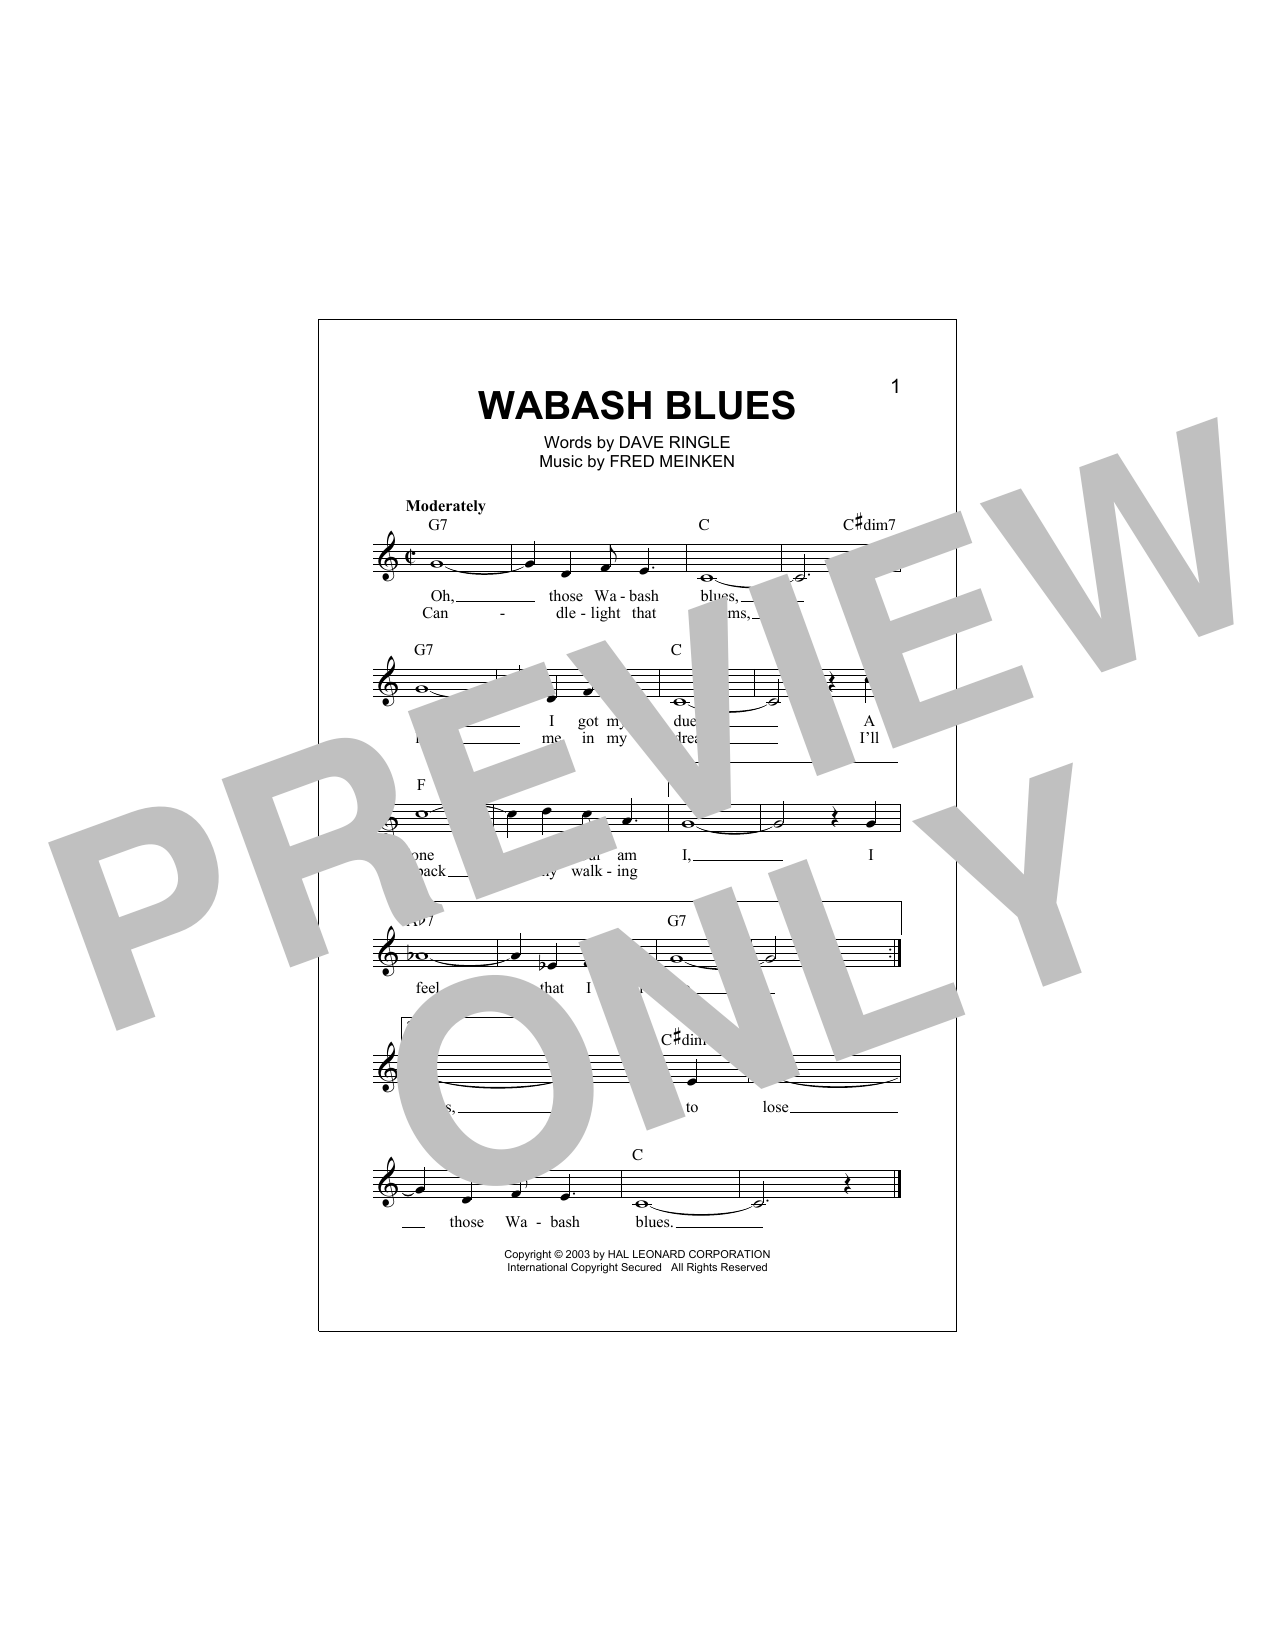 Fred Meinken Wabash Blues Sheet Music Notes & Chords for Melody Line, Lyrics & Chords - Download or Print PDF